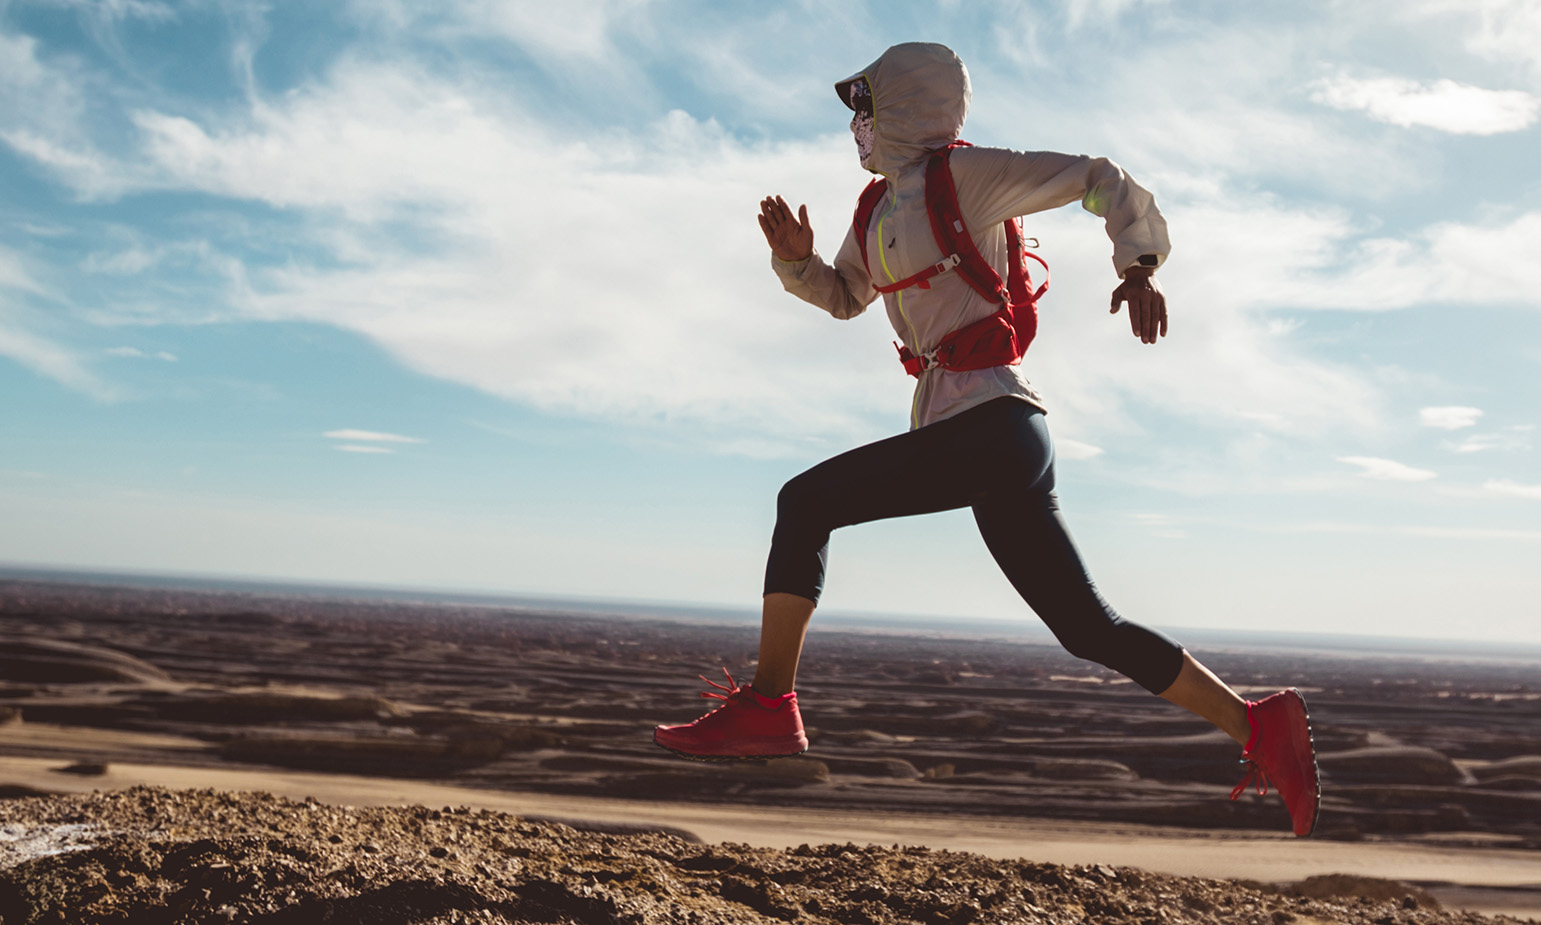 Woman, bandana over her face, runs along dirt trail in arid landscape